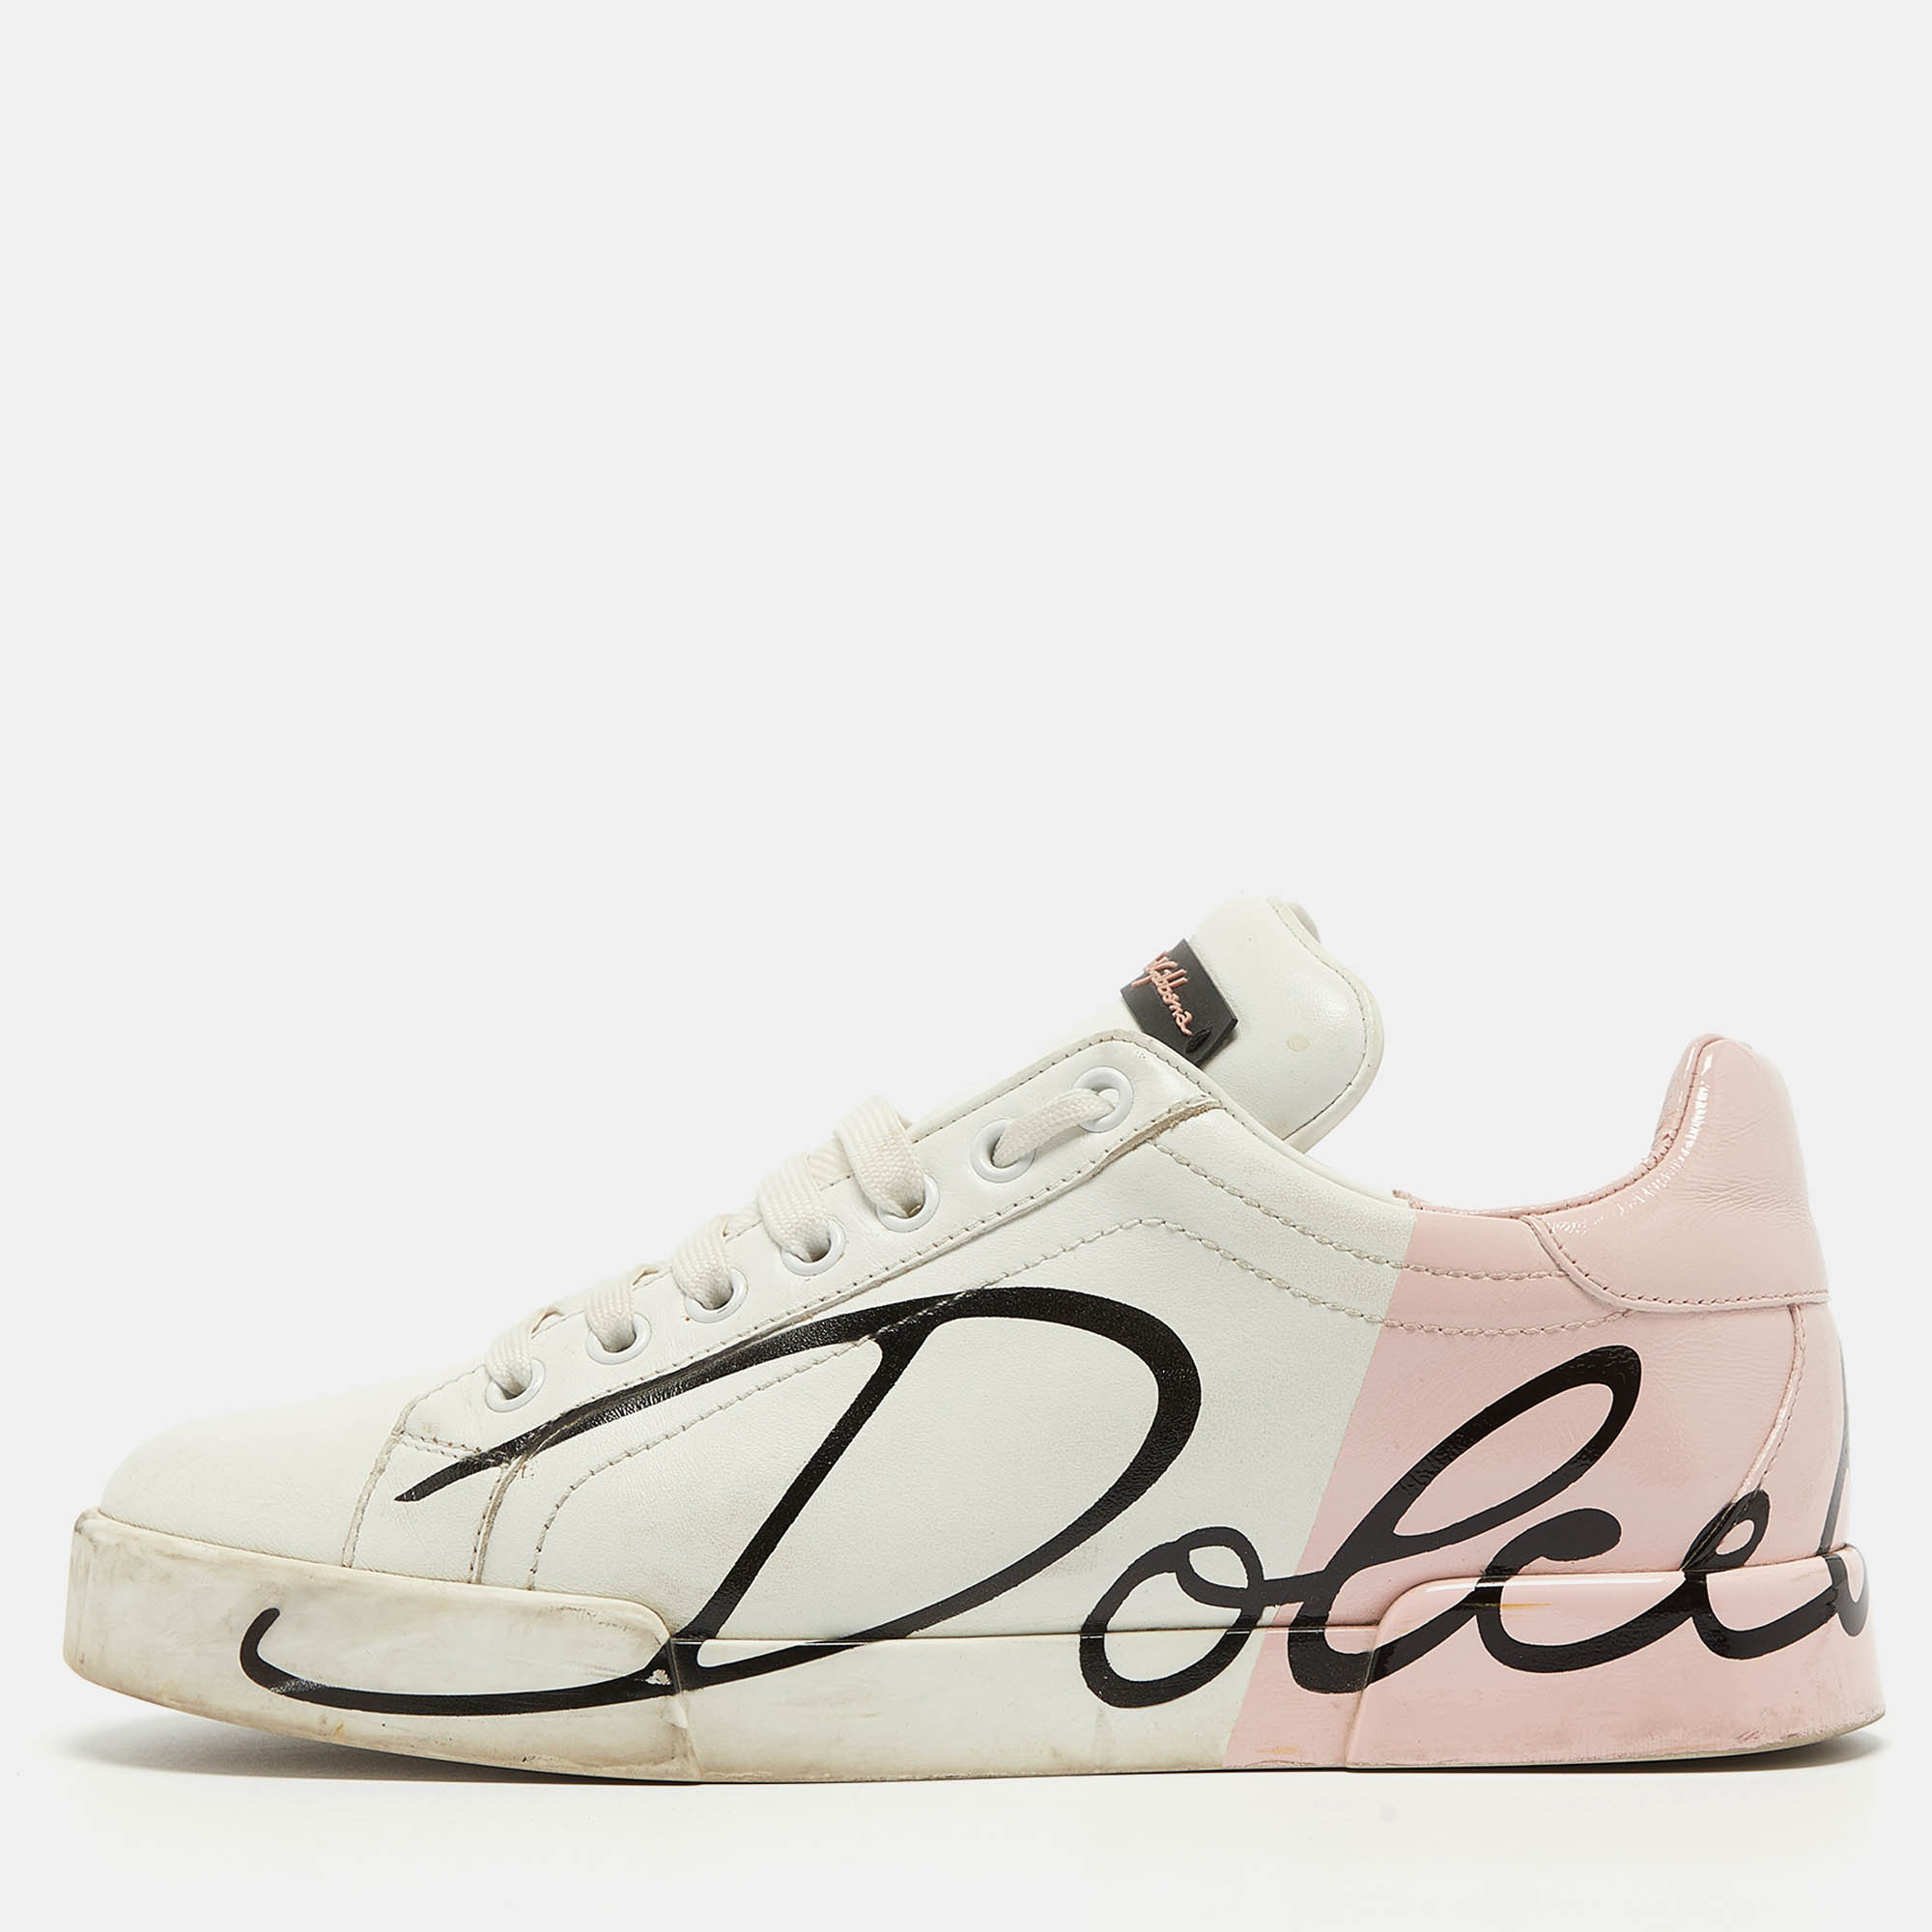 Dolce & gabbana white/pink leather and patent portofino sneakers size 38